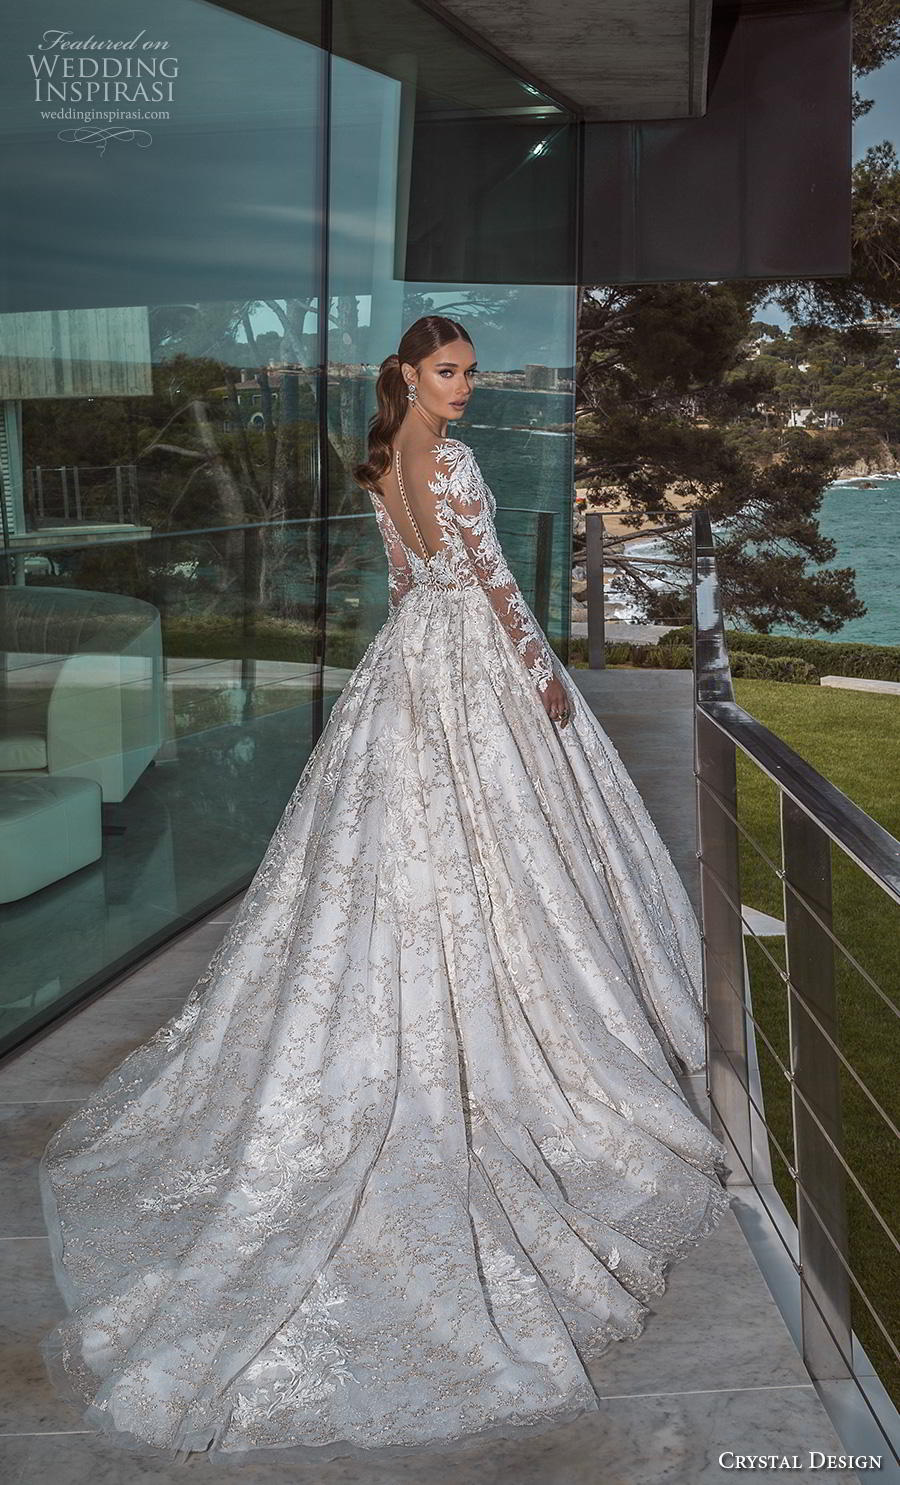 dress design 2019 for wedding